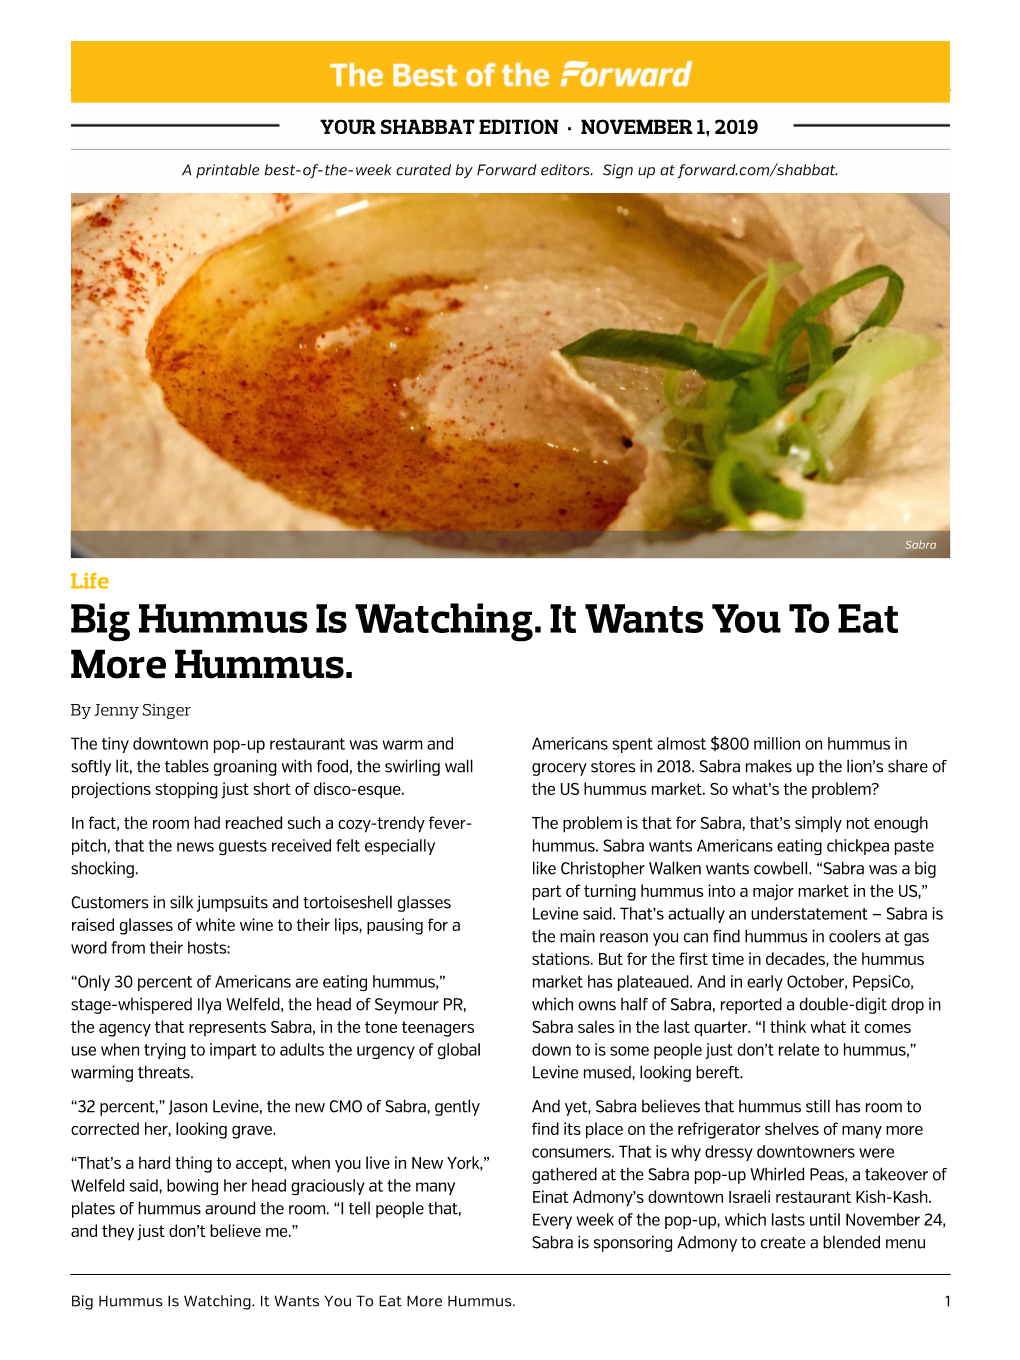 Big Hummus Is Watching. It Wants You to Eat More Hummus